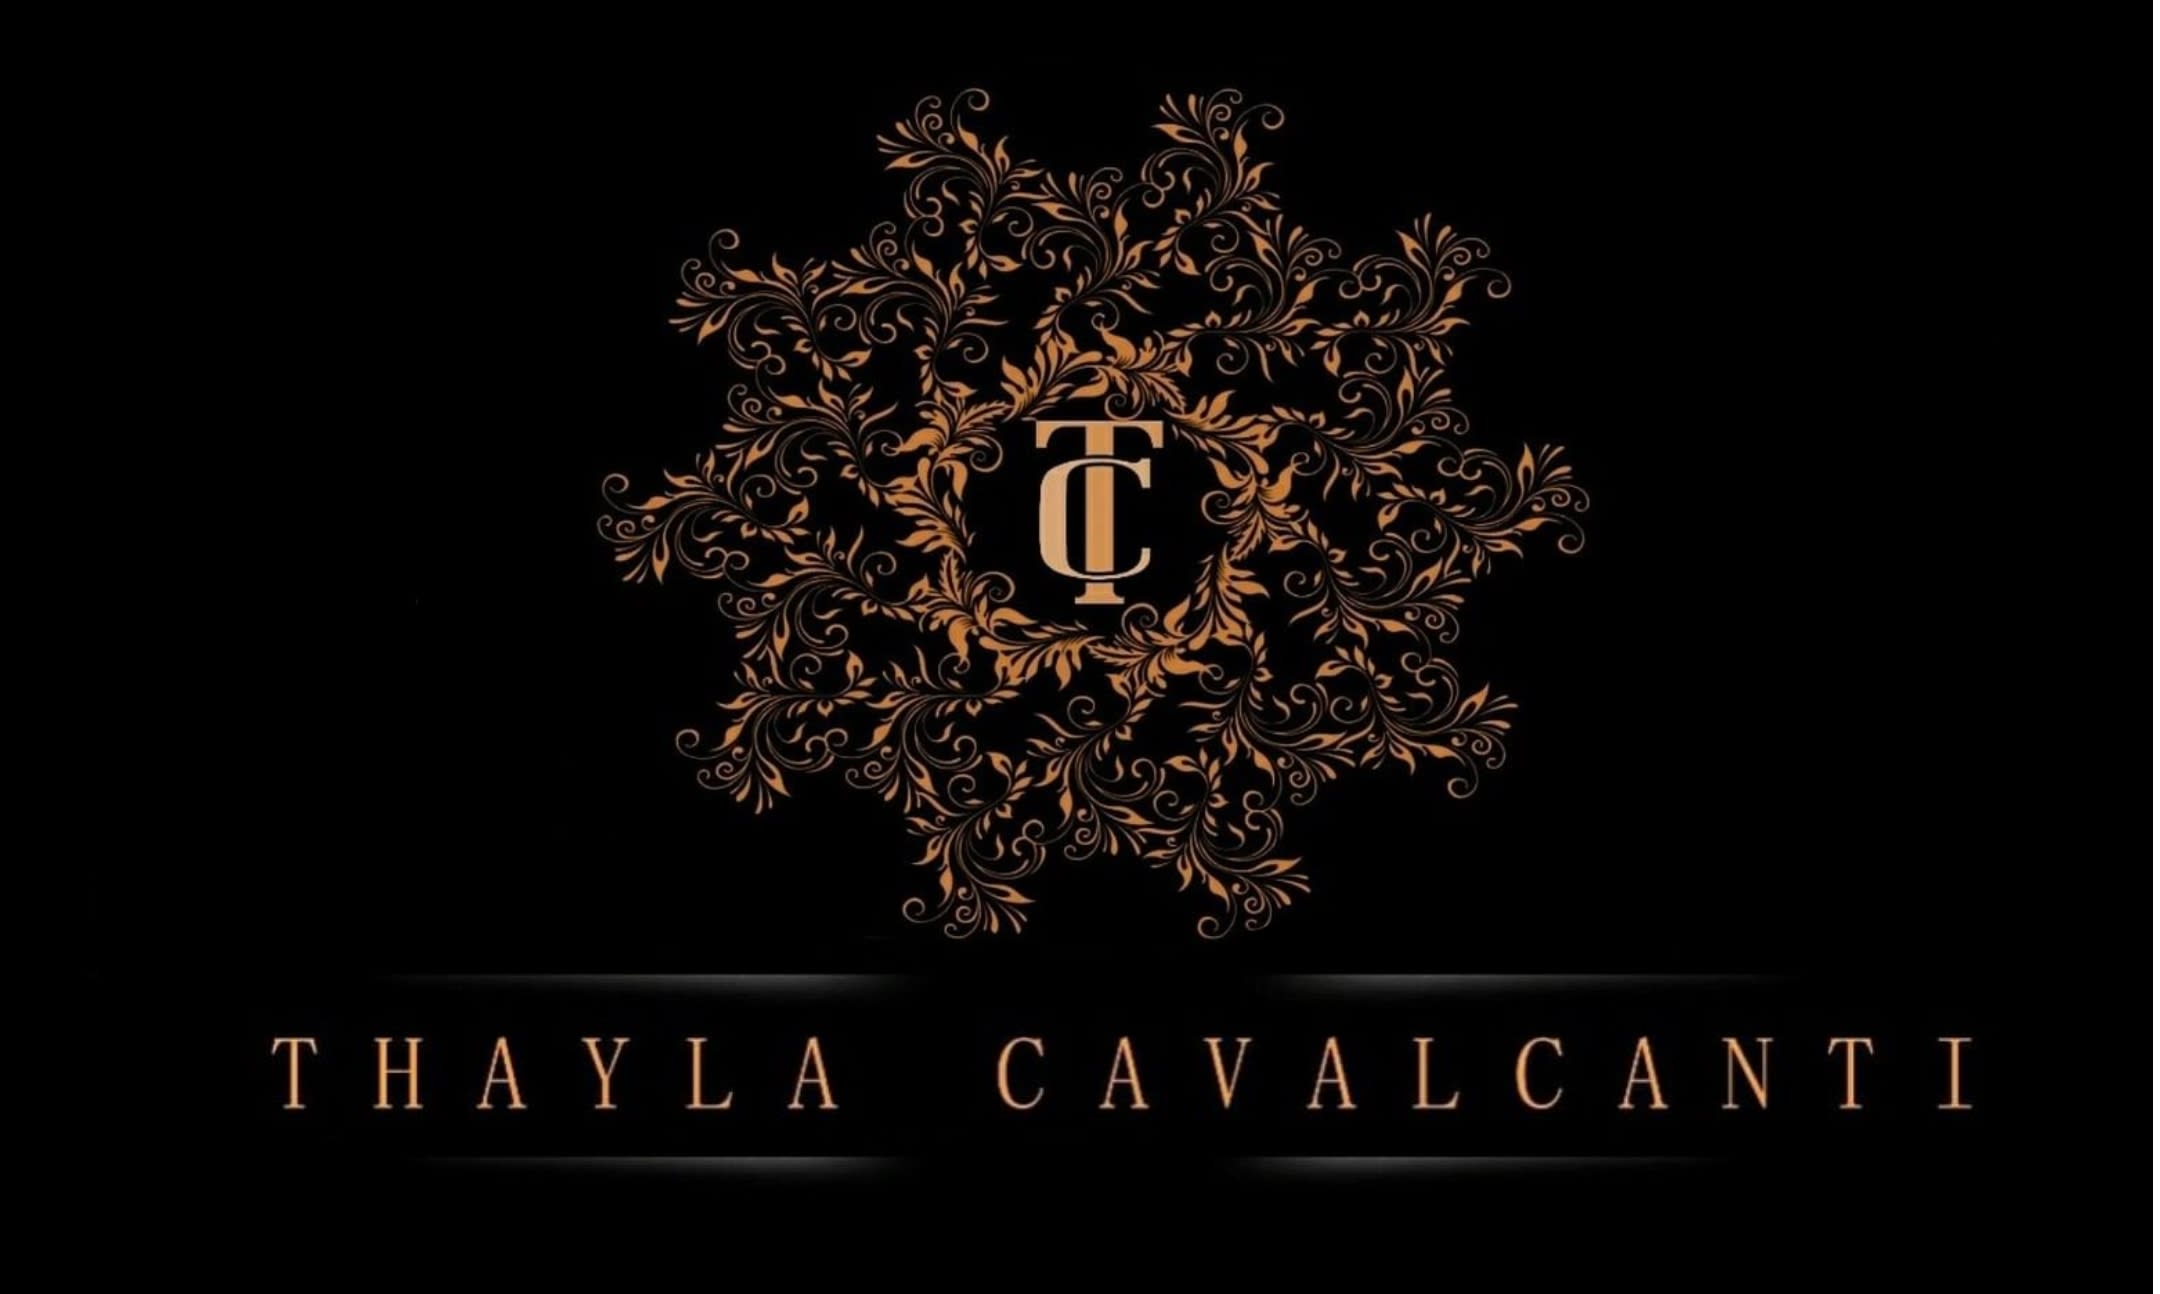 Thayla Cavalcanti